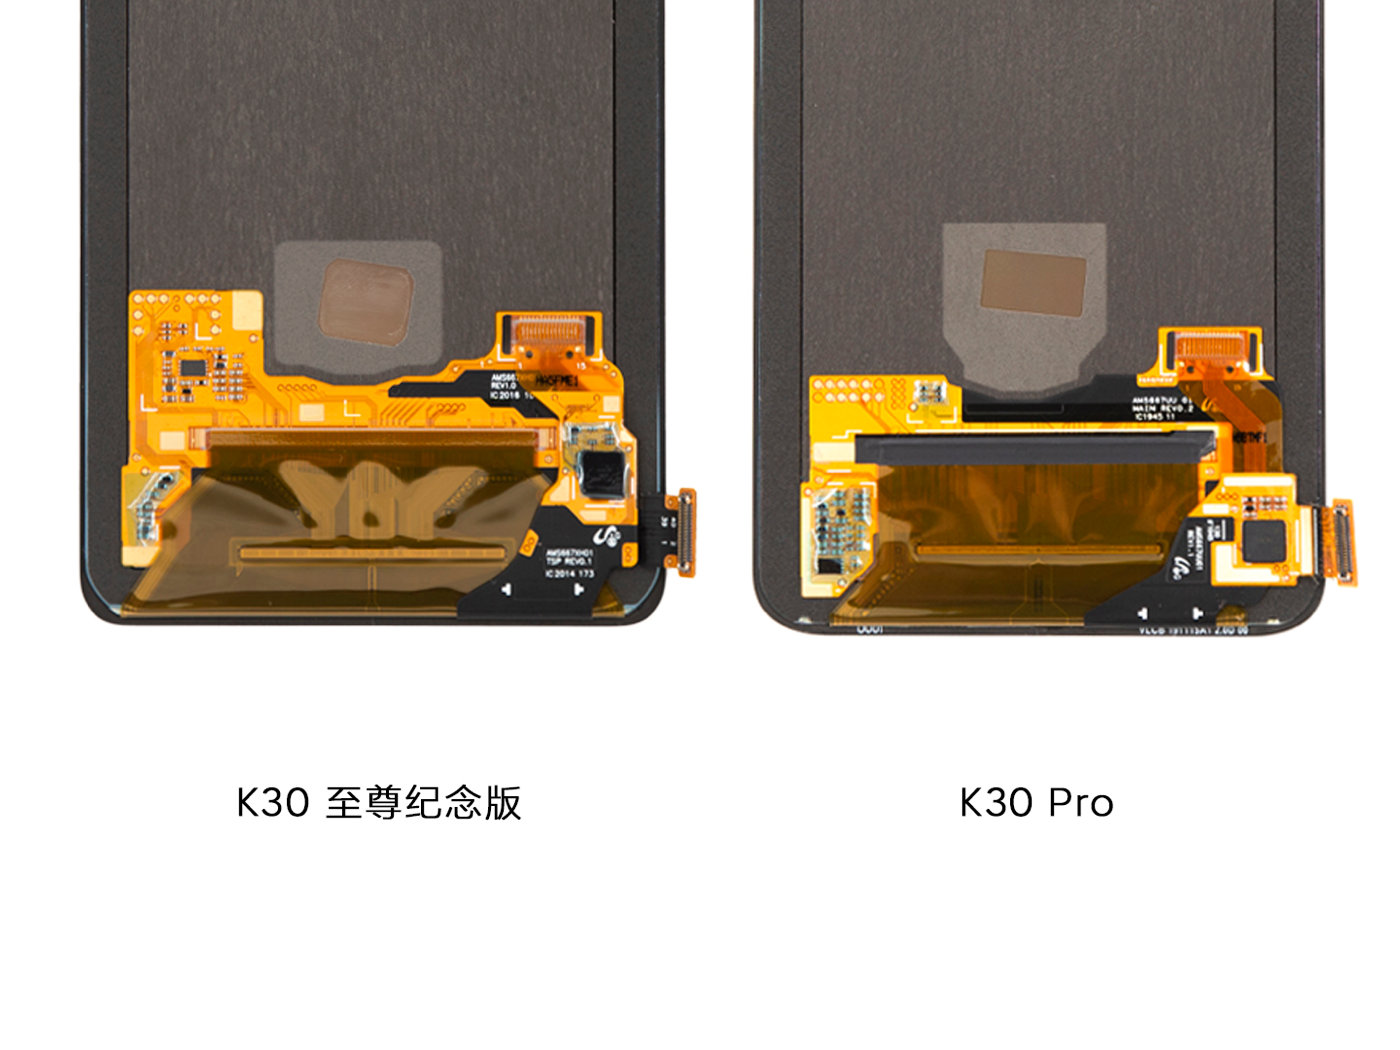 K30超大杯和K30 Pro有啥不同？官方拆解真相了